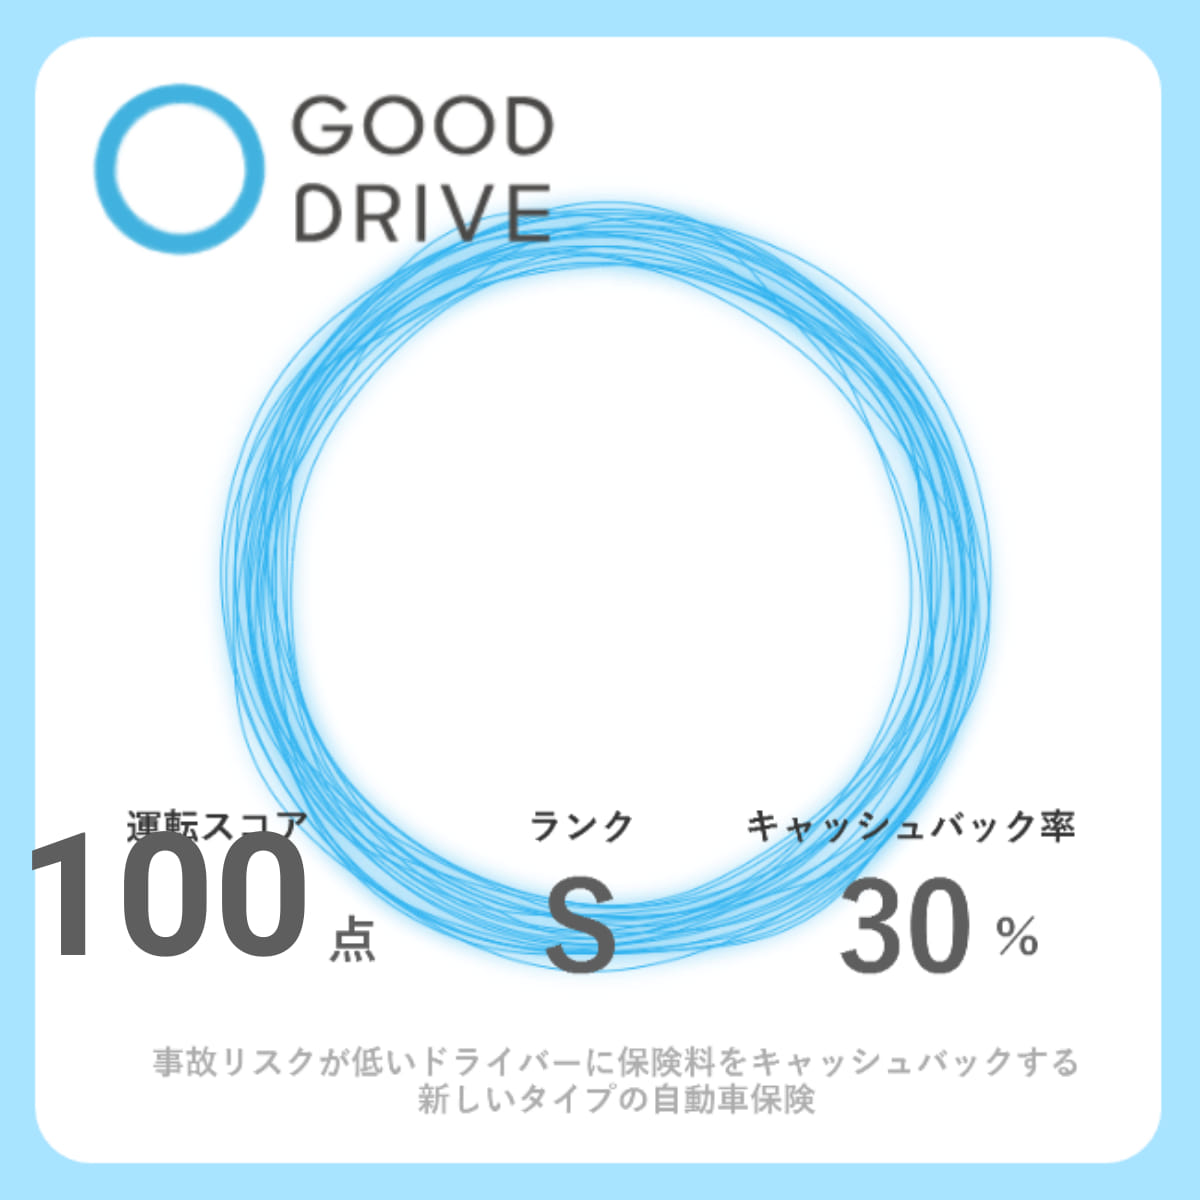 GOOD DRIVEのアプリ画面